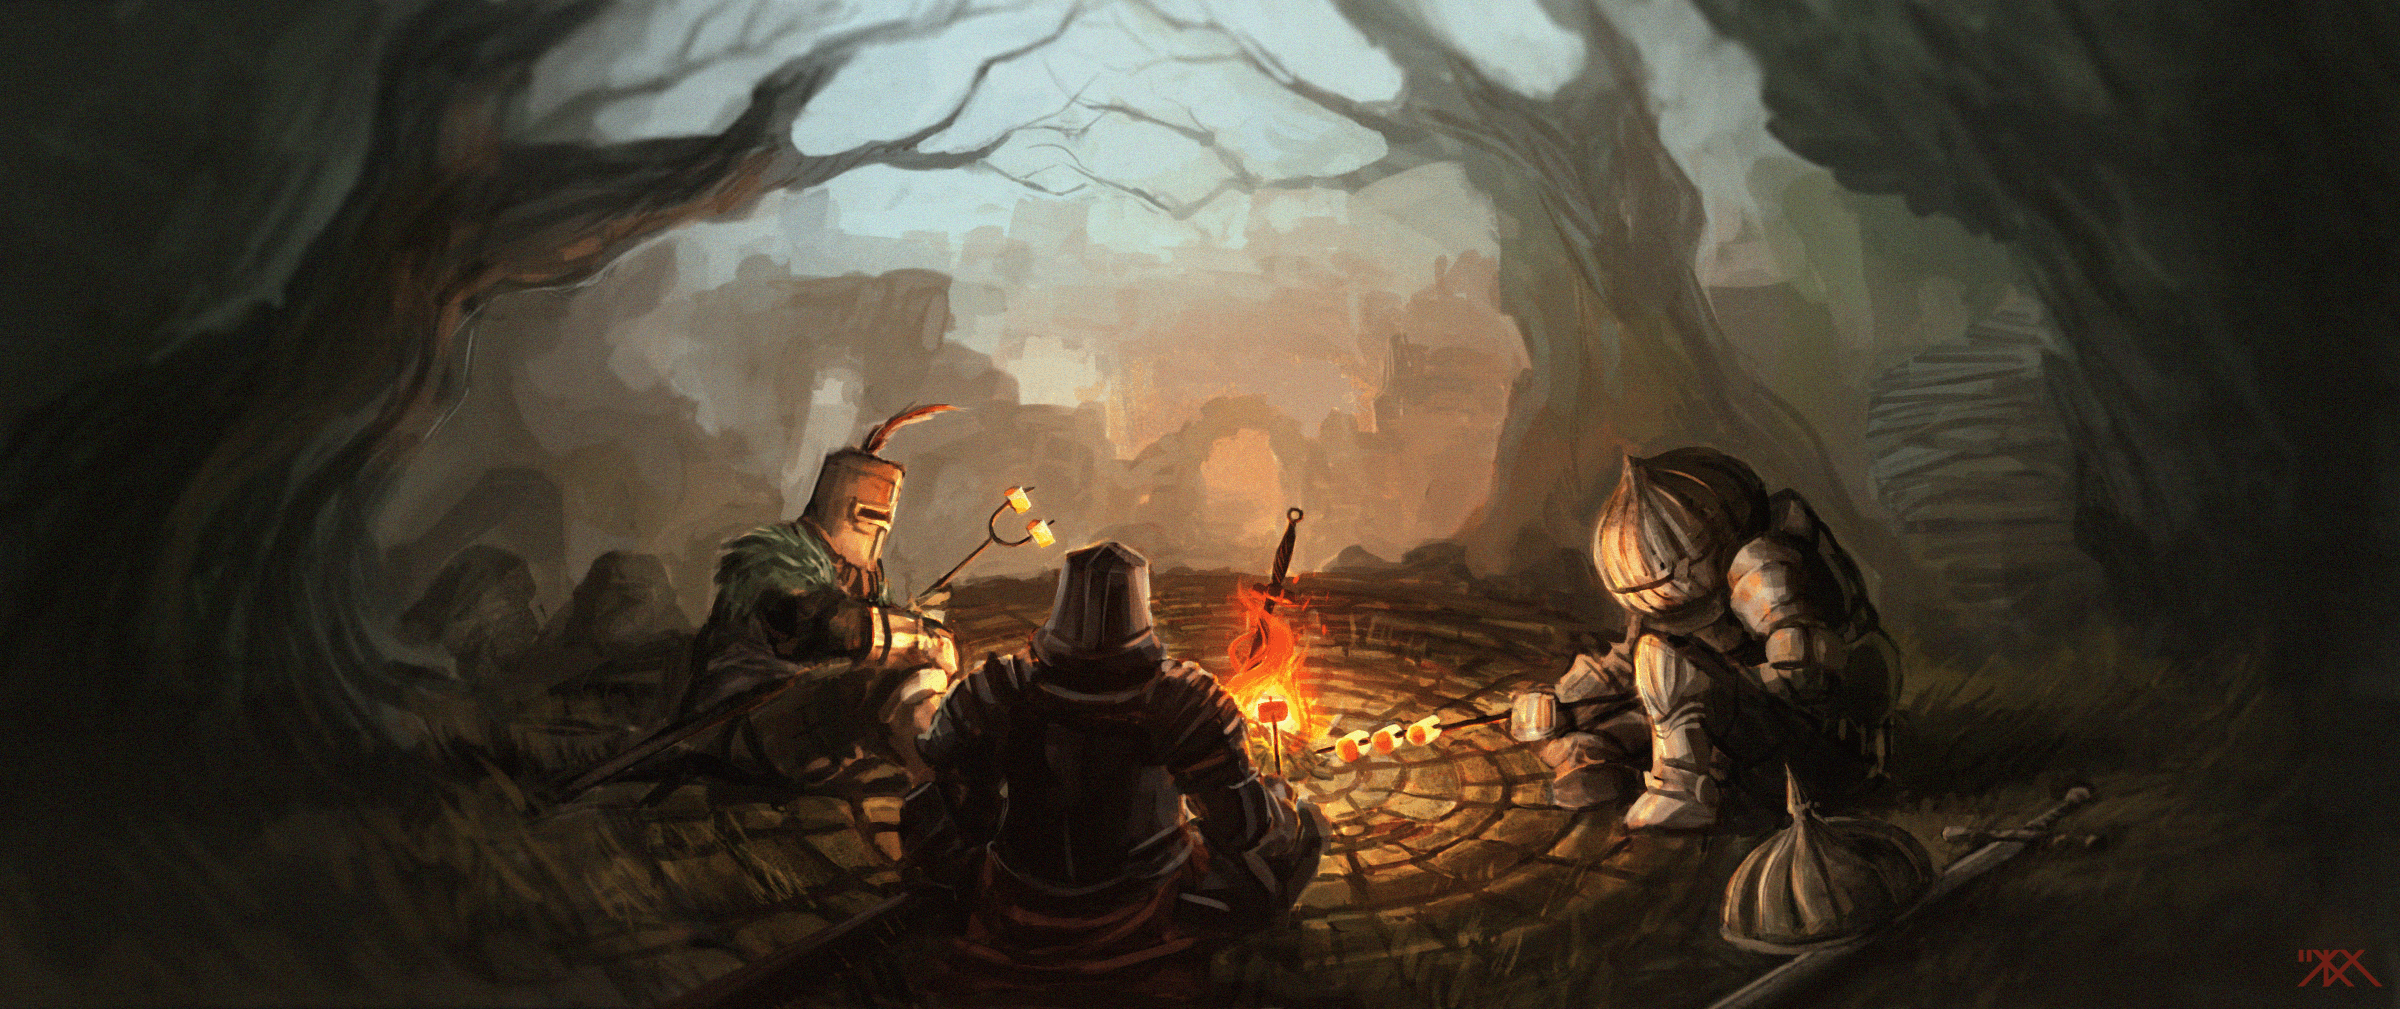 Dark Souls Bonfire Wallpapers - Top Free Dark Souls Bonfire Backgrounds